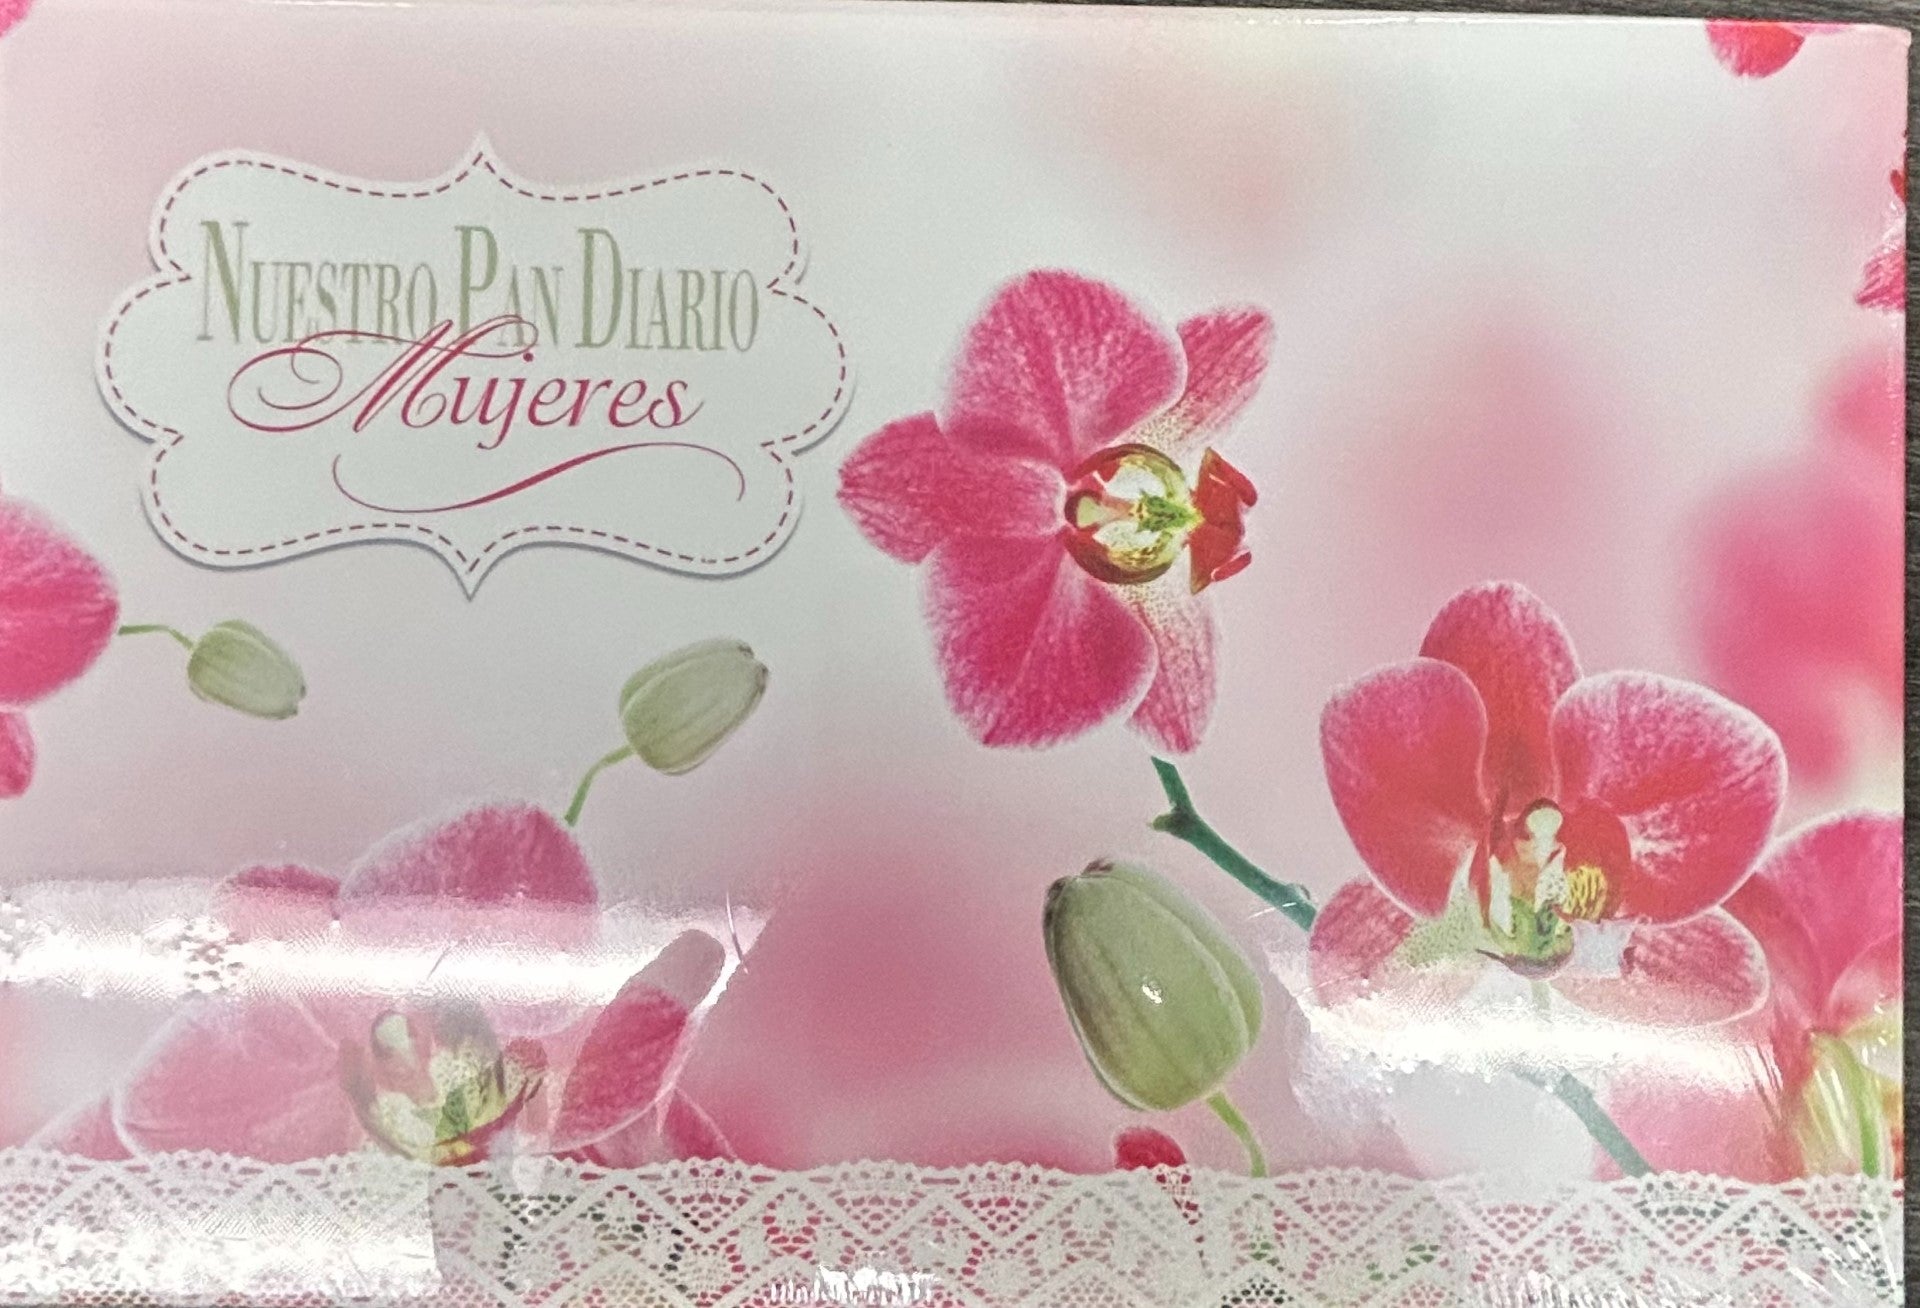 Nuestro pan diario Mujeres (gift box)